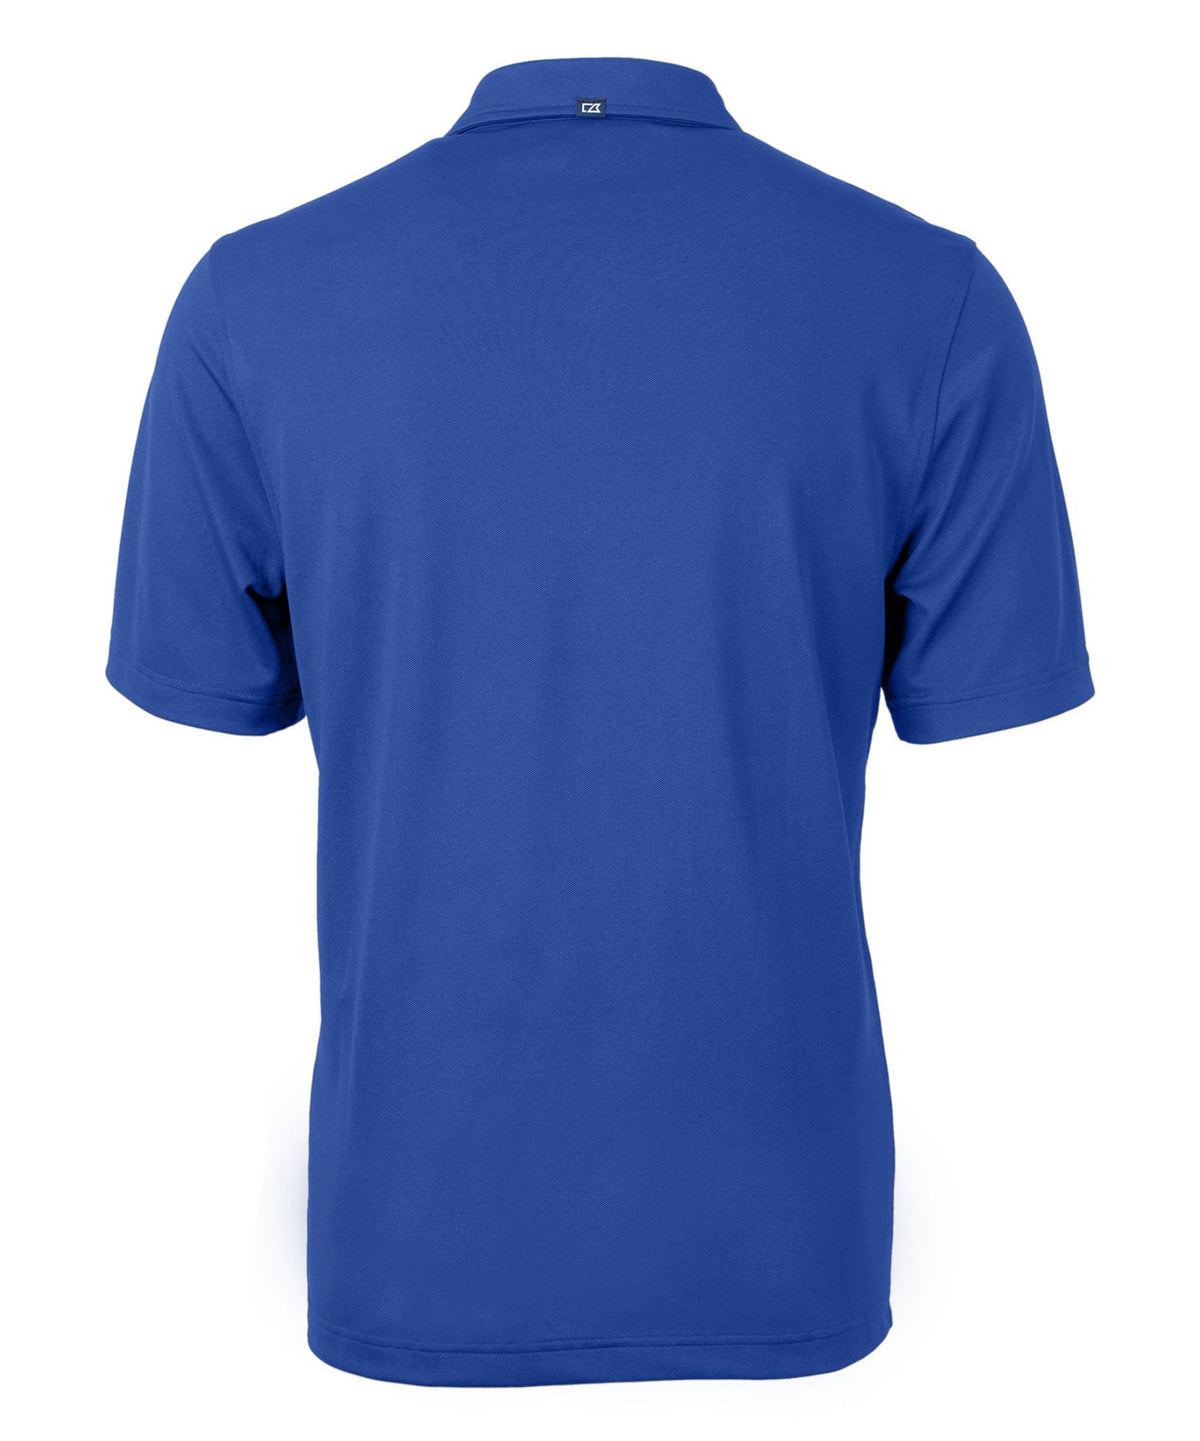 Cutter & Buck University of Kansas Jayhawks Short Sleeve Polo Knit Shirt, Men's Big & Tall